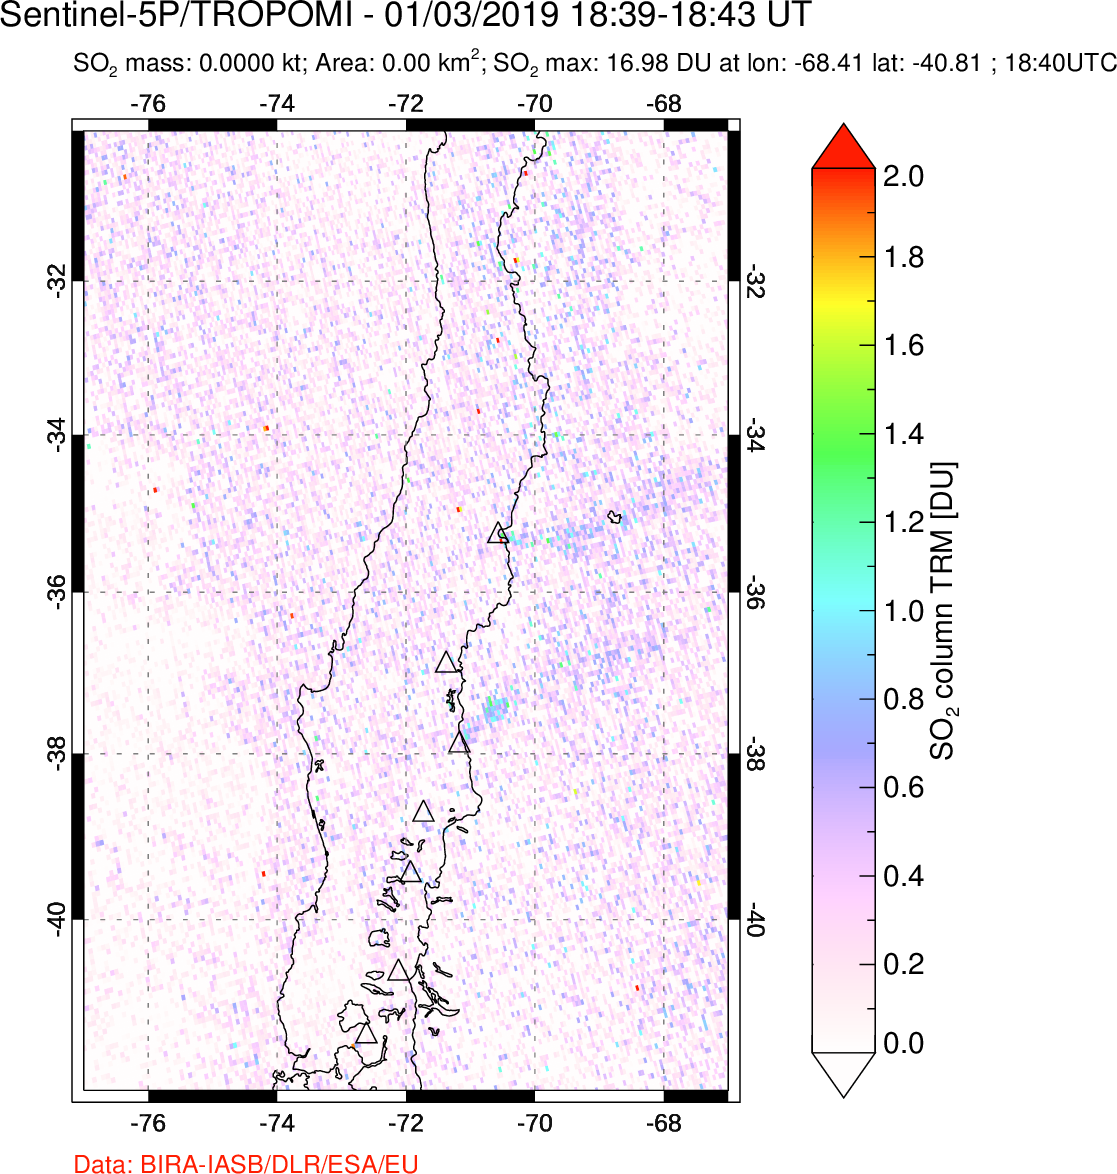 A sulfur dioxide image over Central Chile on Jan 03, 2019.